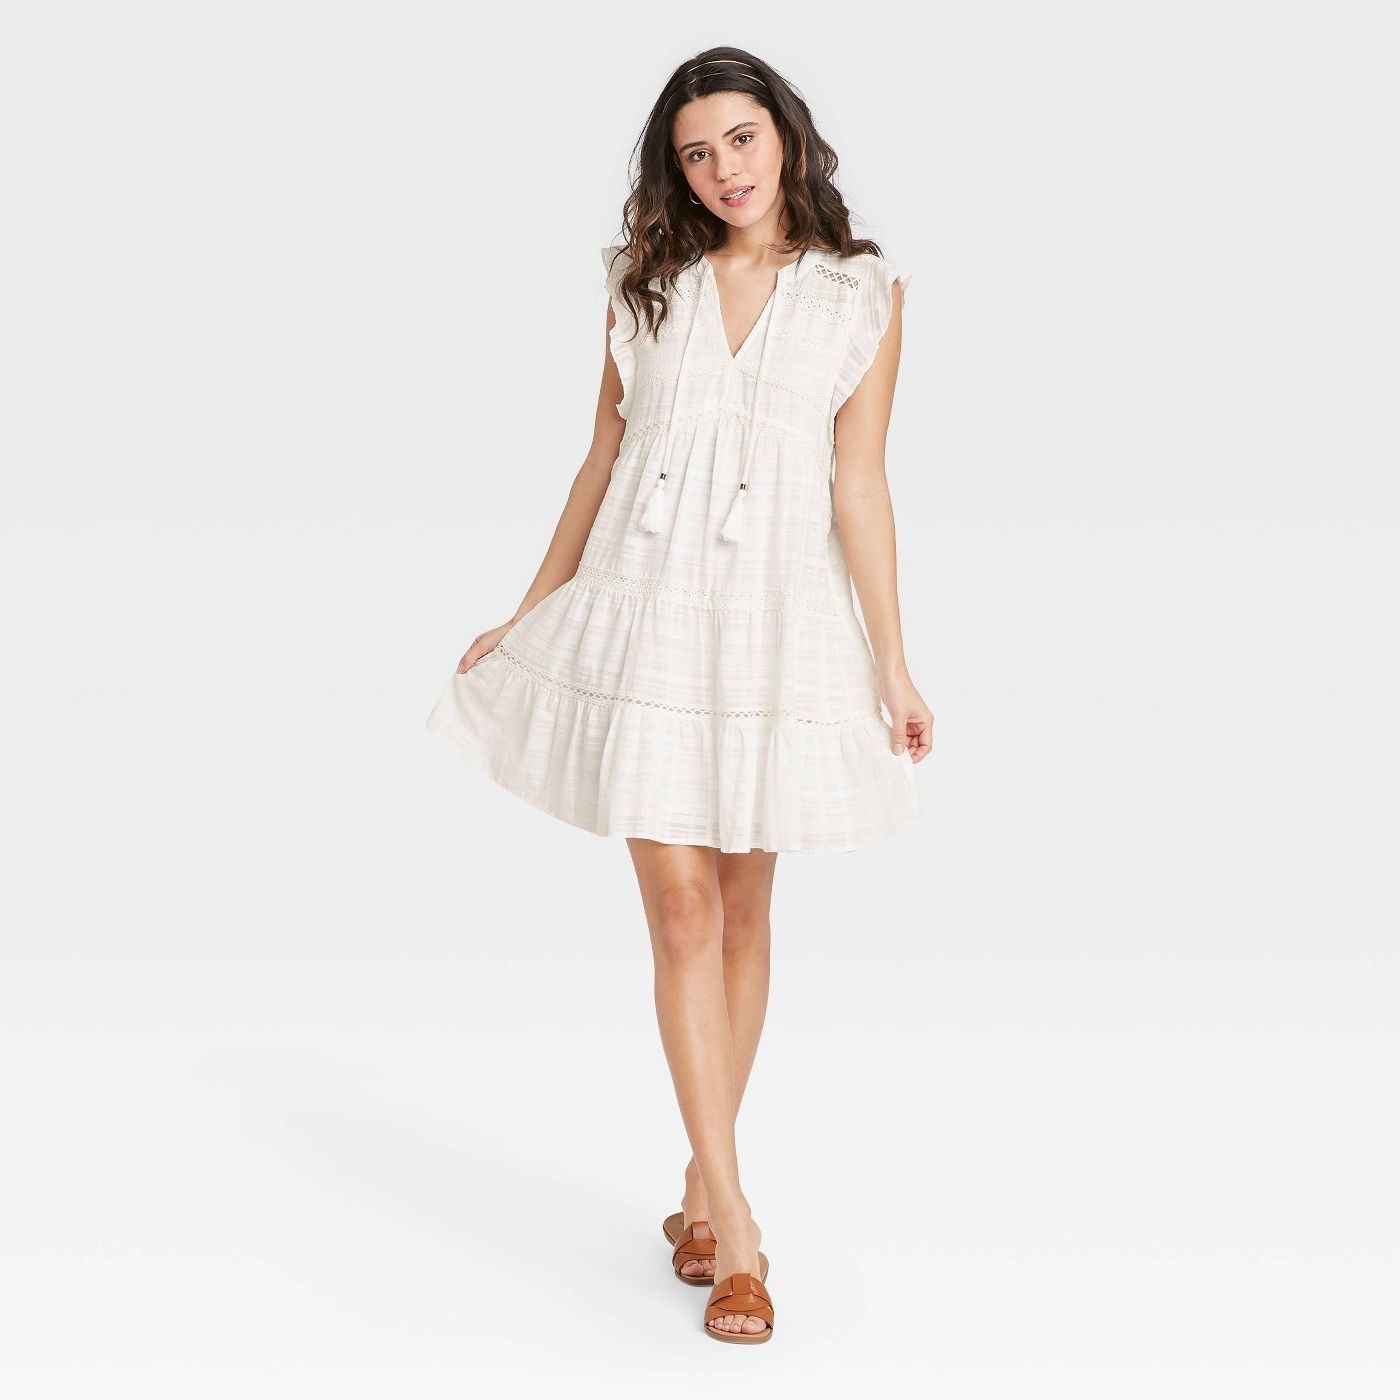 A model wearing a white mini ruffle dress